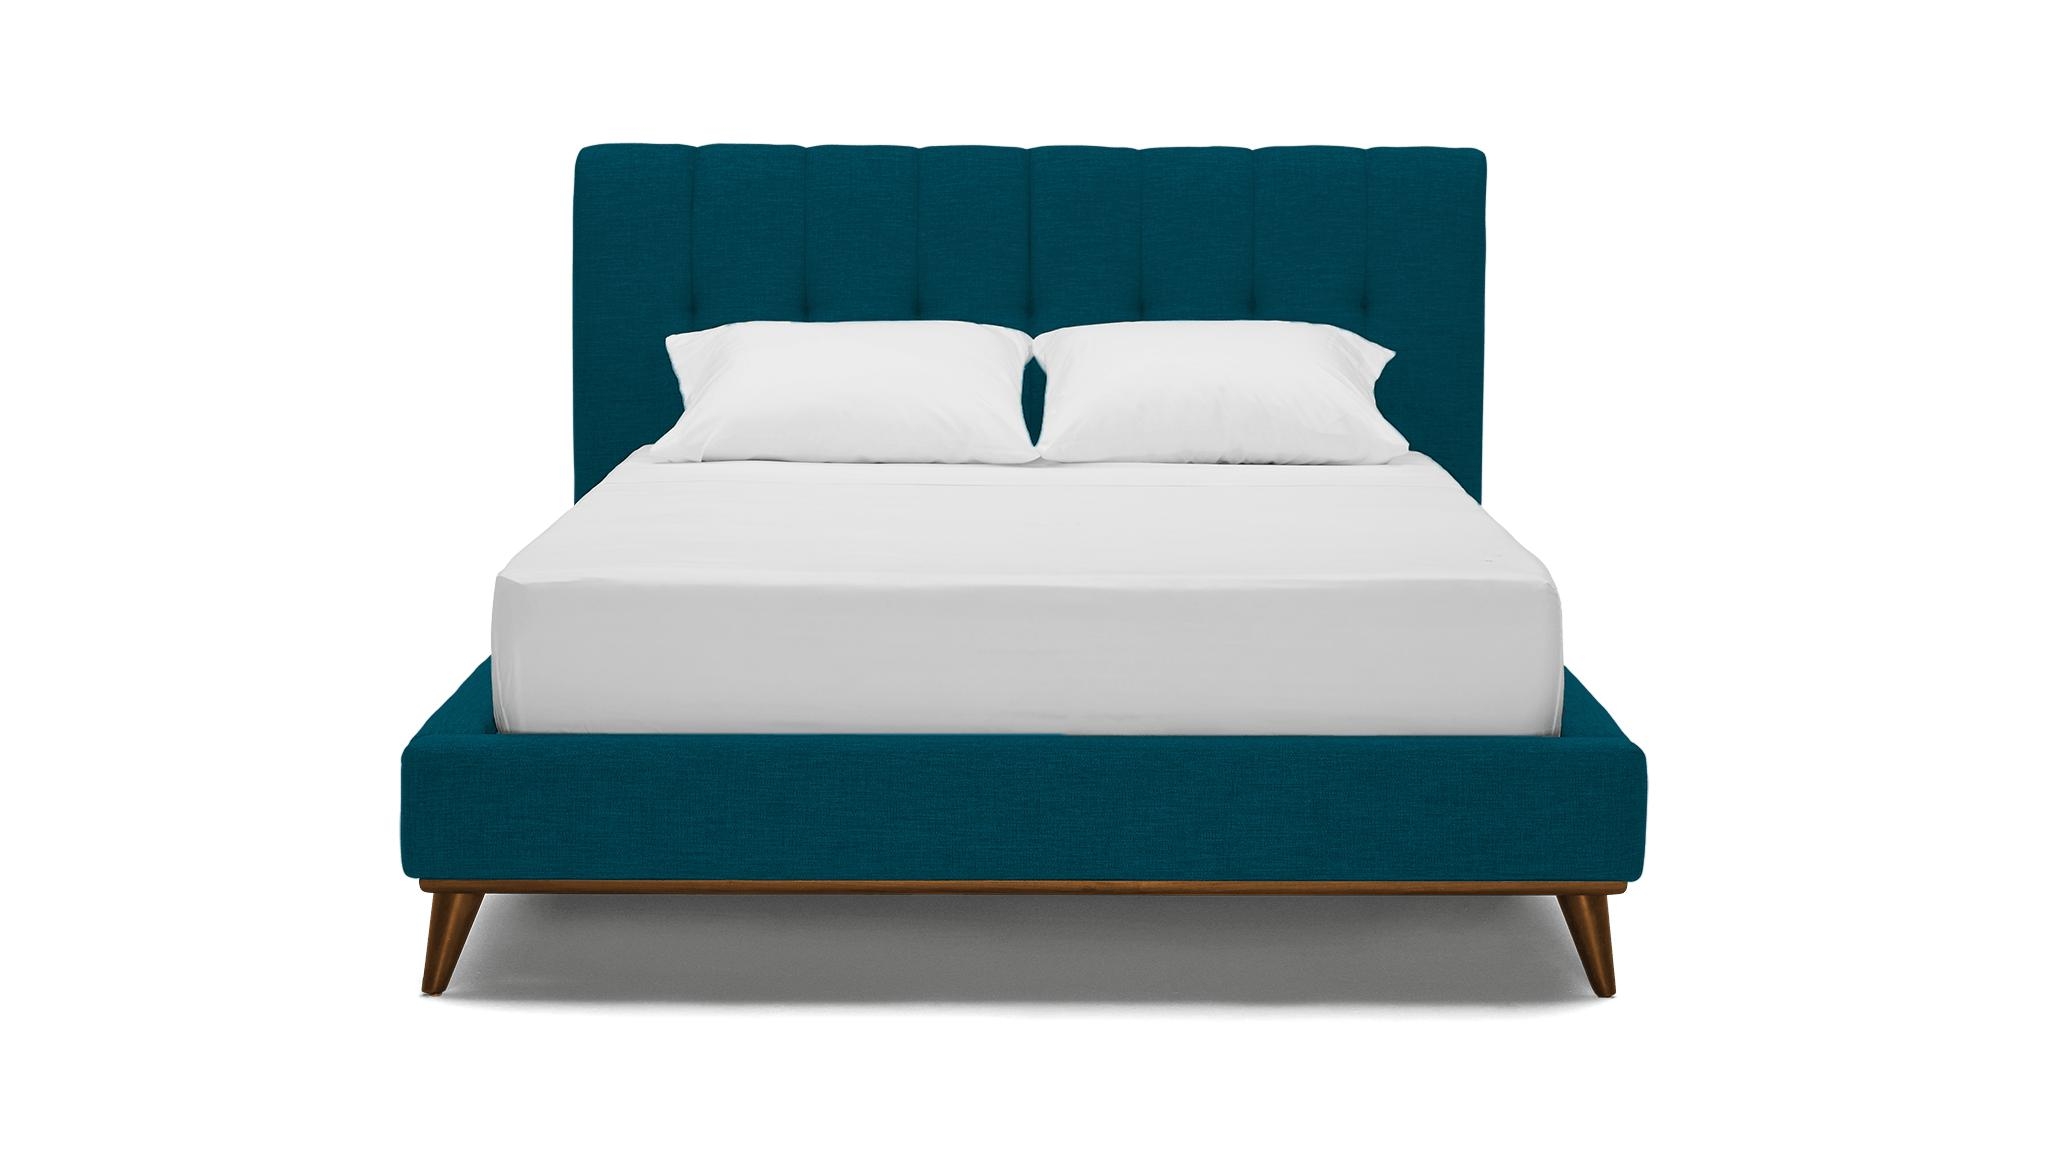 Blue Hughes Mid Century Modern Bed - Key Largo Zenith Teal - Mocha - Full - Image 0